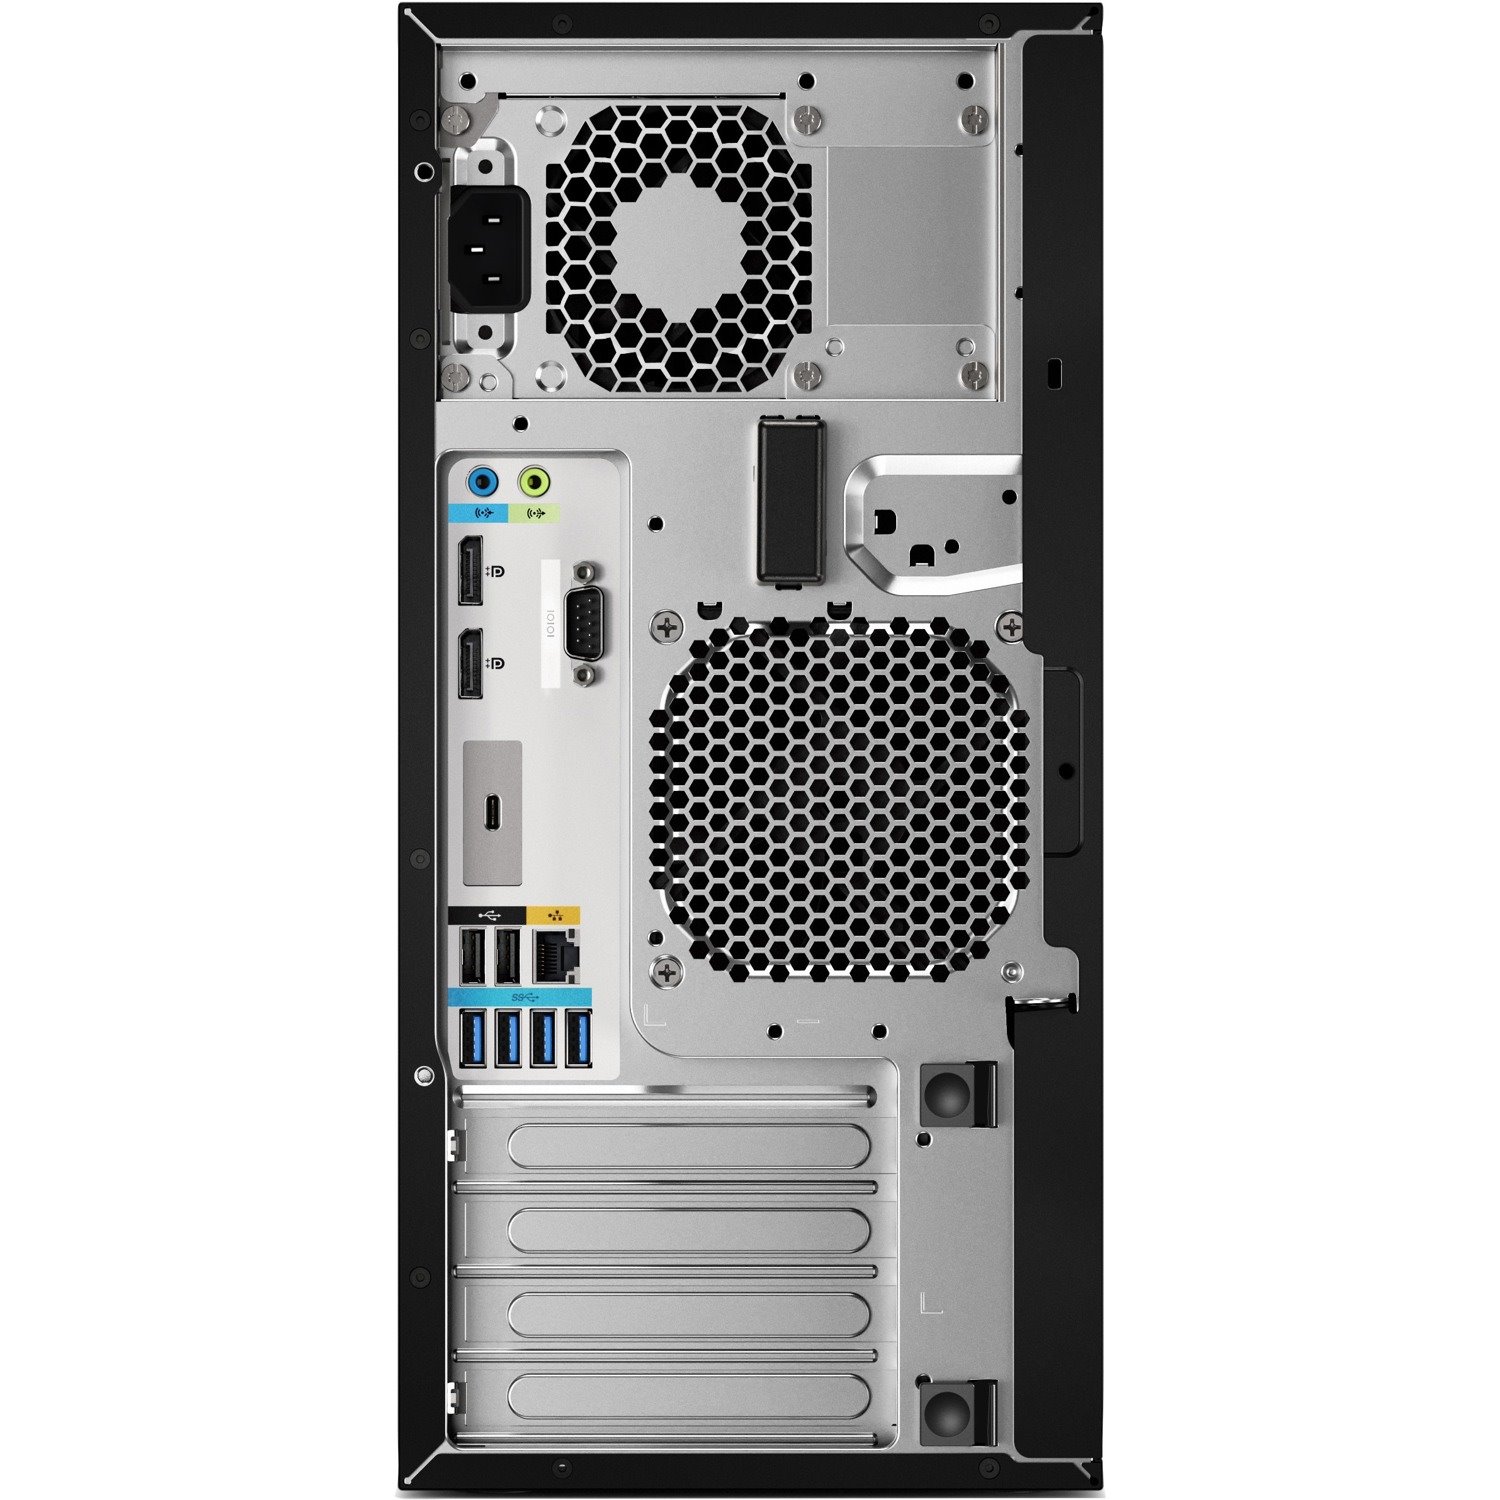 HP Z2 G4 Workstation - Intel Core i9 9th Gen i9-9900K - 32 GB - 512 GB SSD - Tower